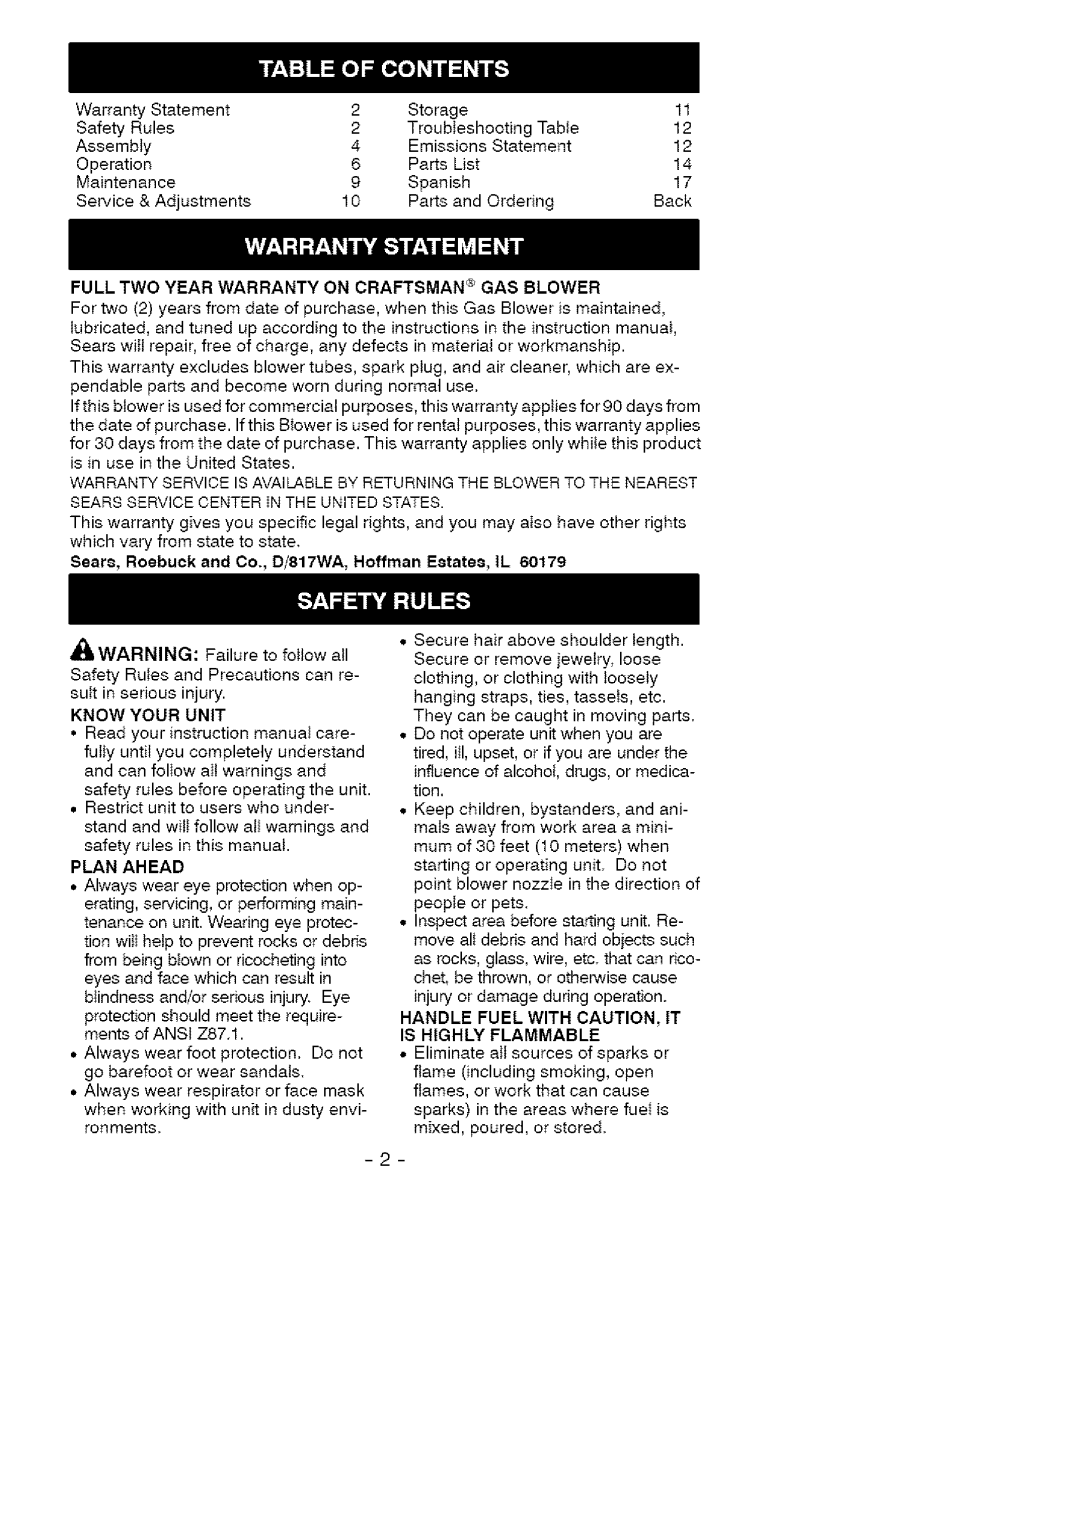 Craftsman 358.79731 instruction manual Full Two Year Warranty On Craftsman Gas Blower, Plan Ahead 